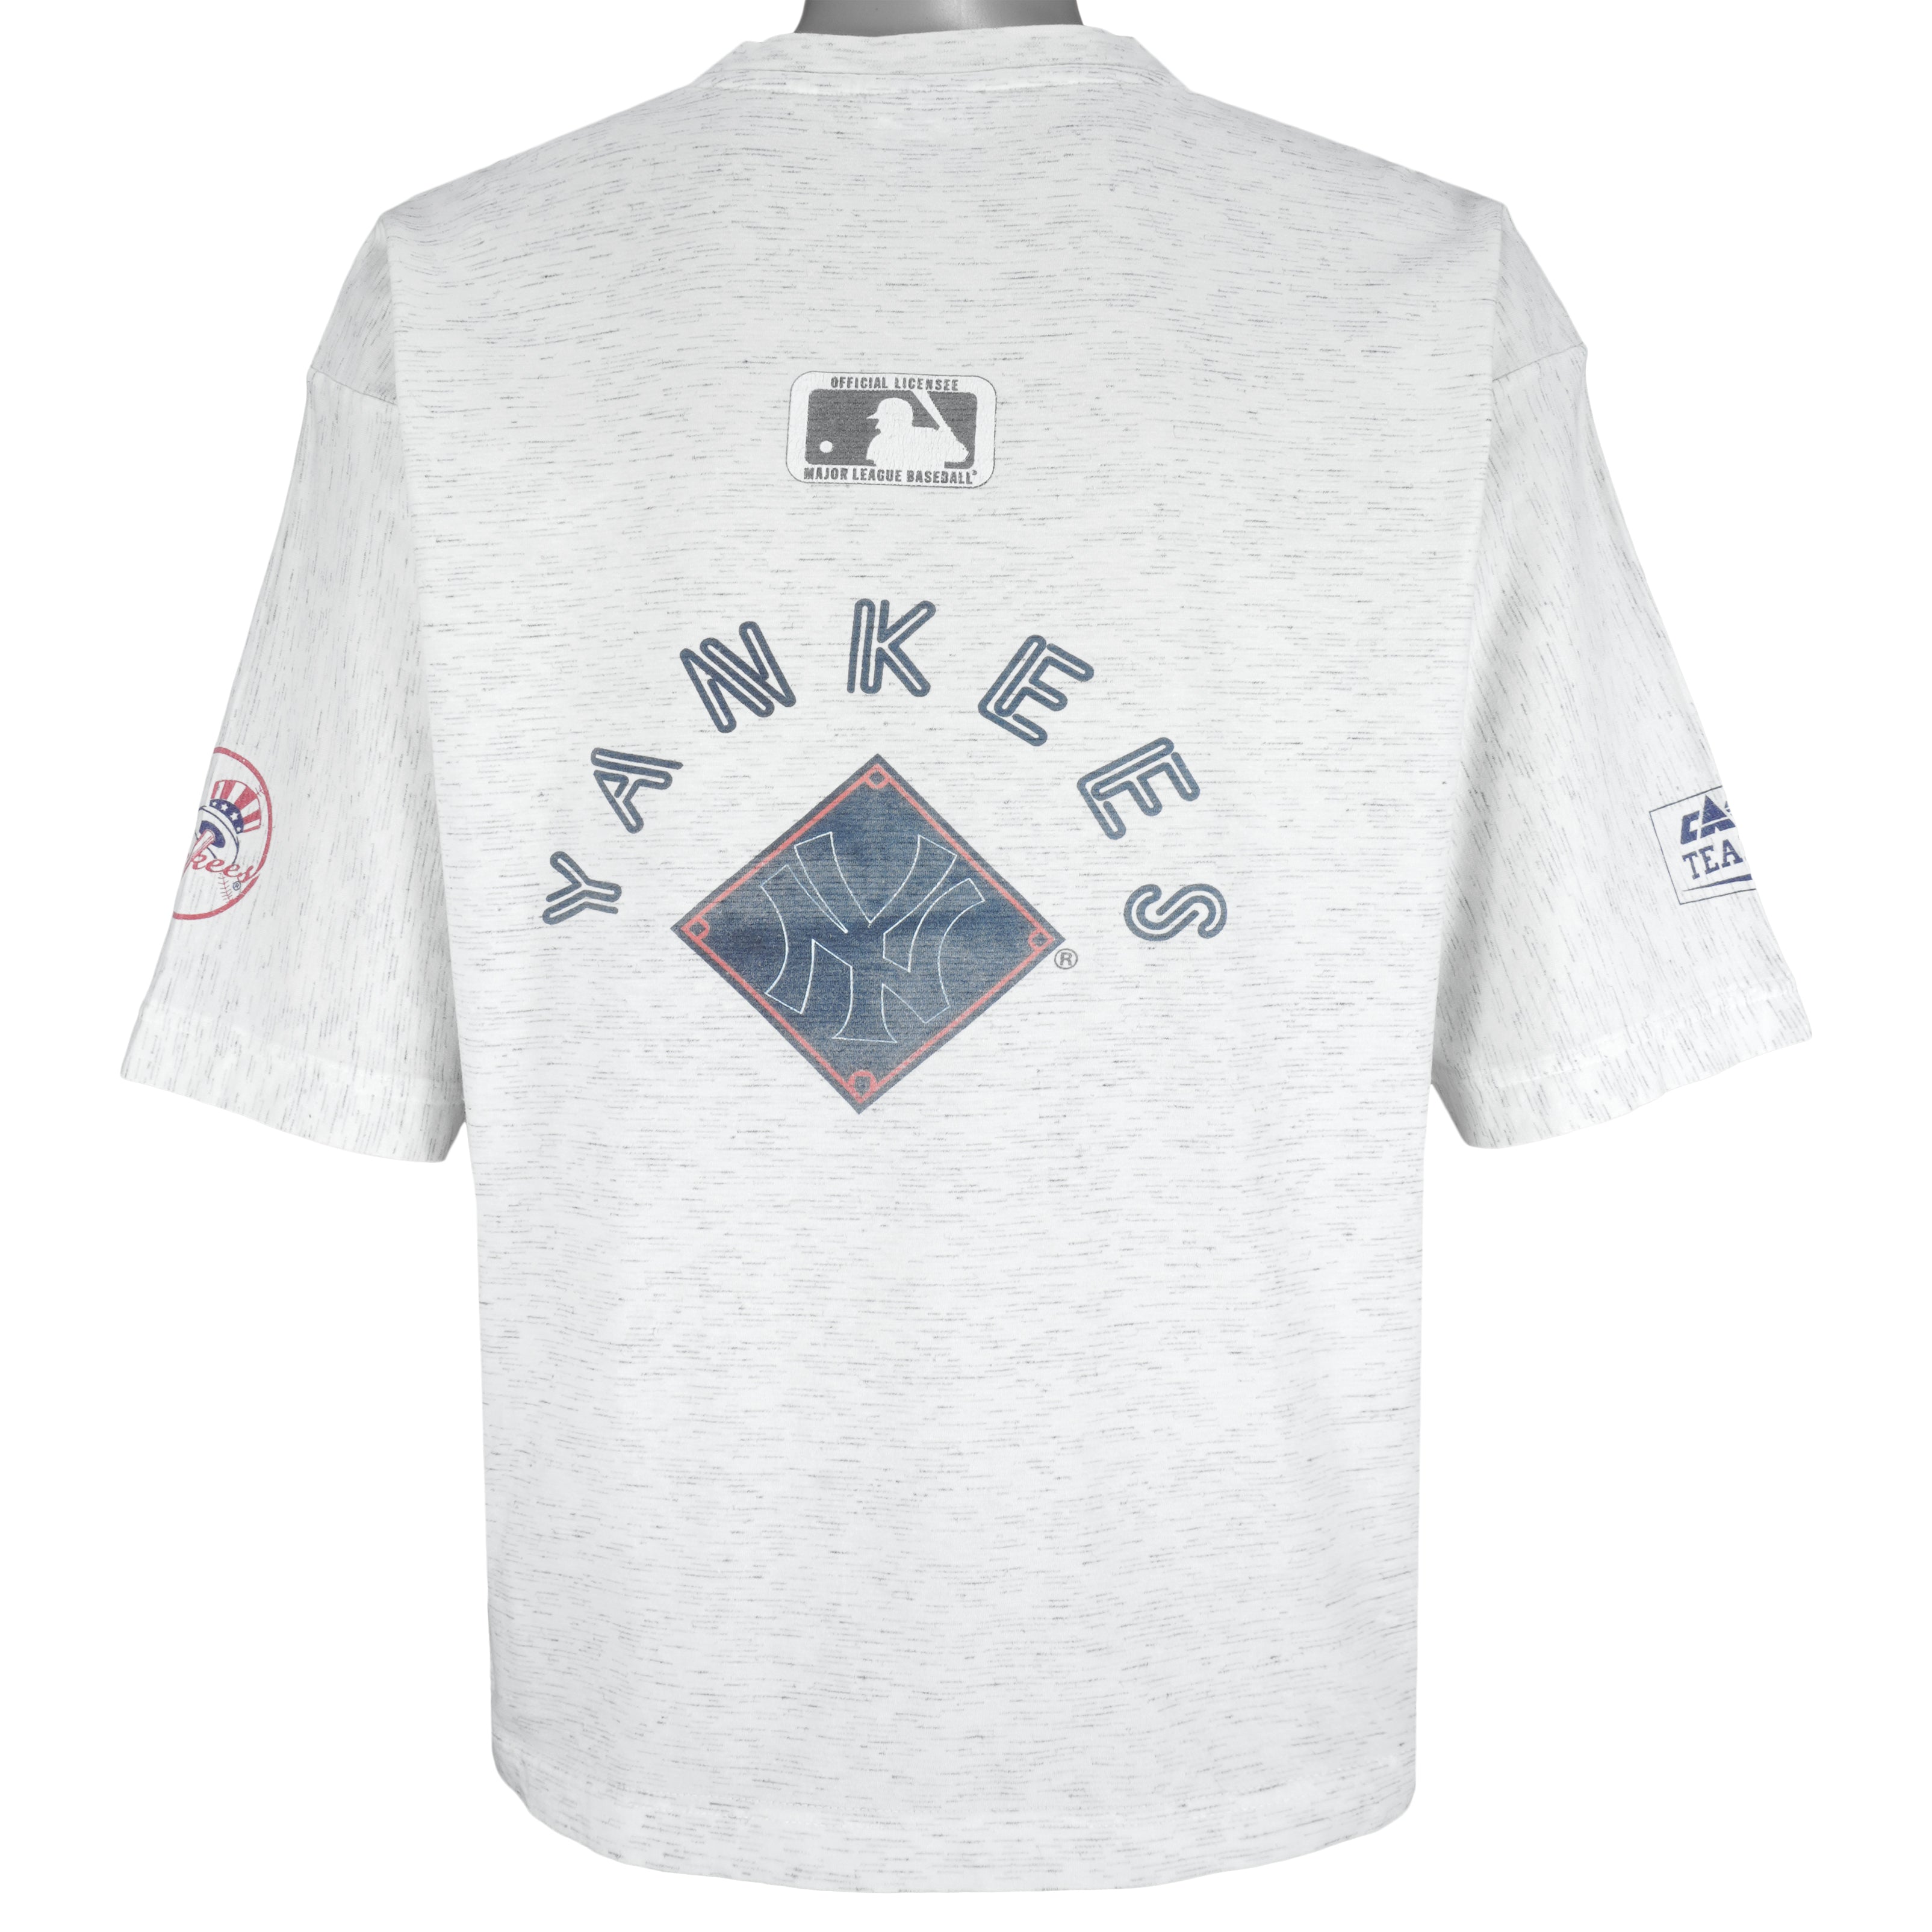 Mlb New York Yankees Looney Tunes Shirt - High-Quality Printed Brand